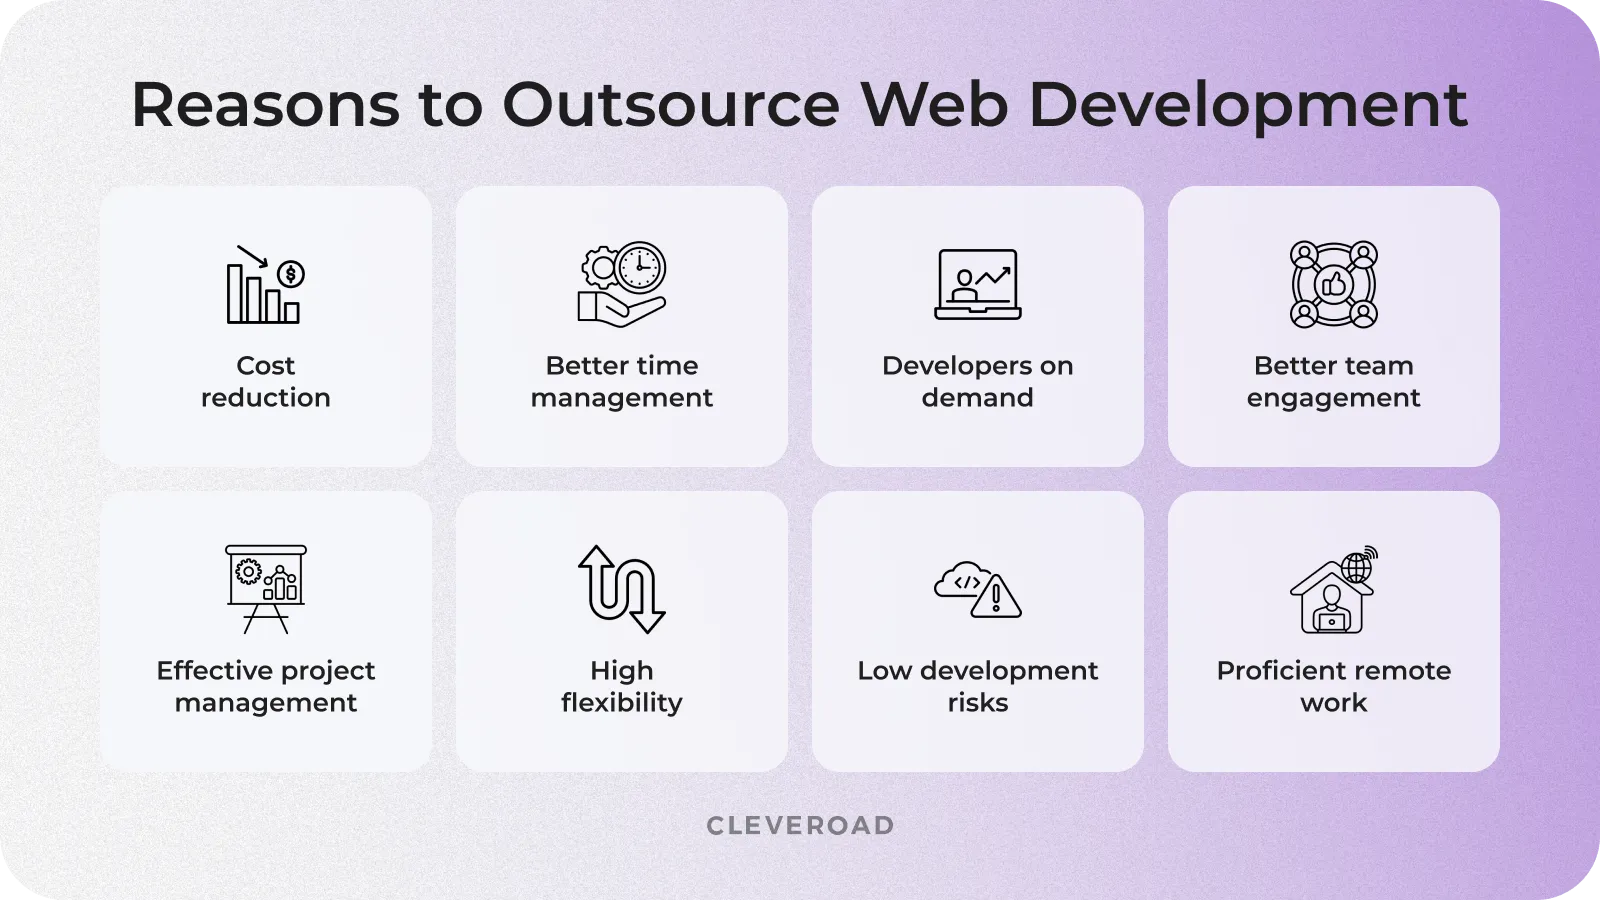 Outsourcing web development benefits